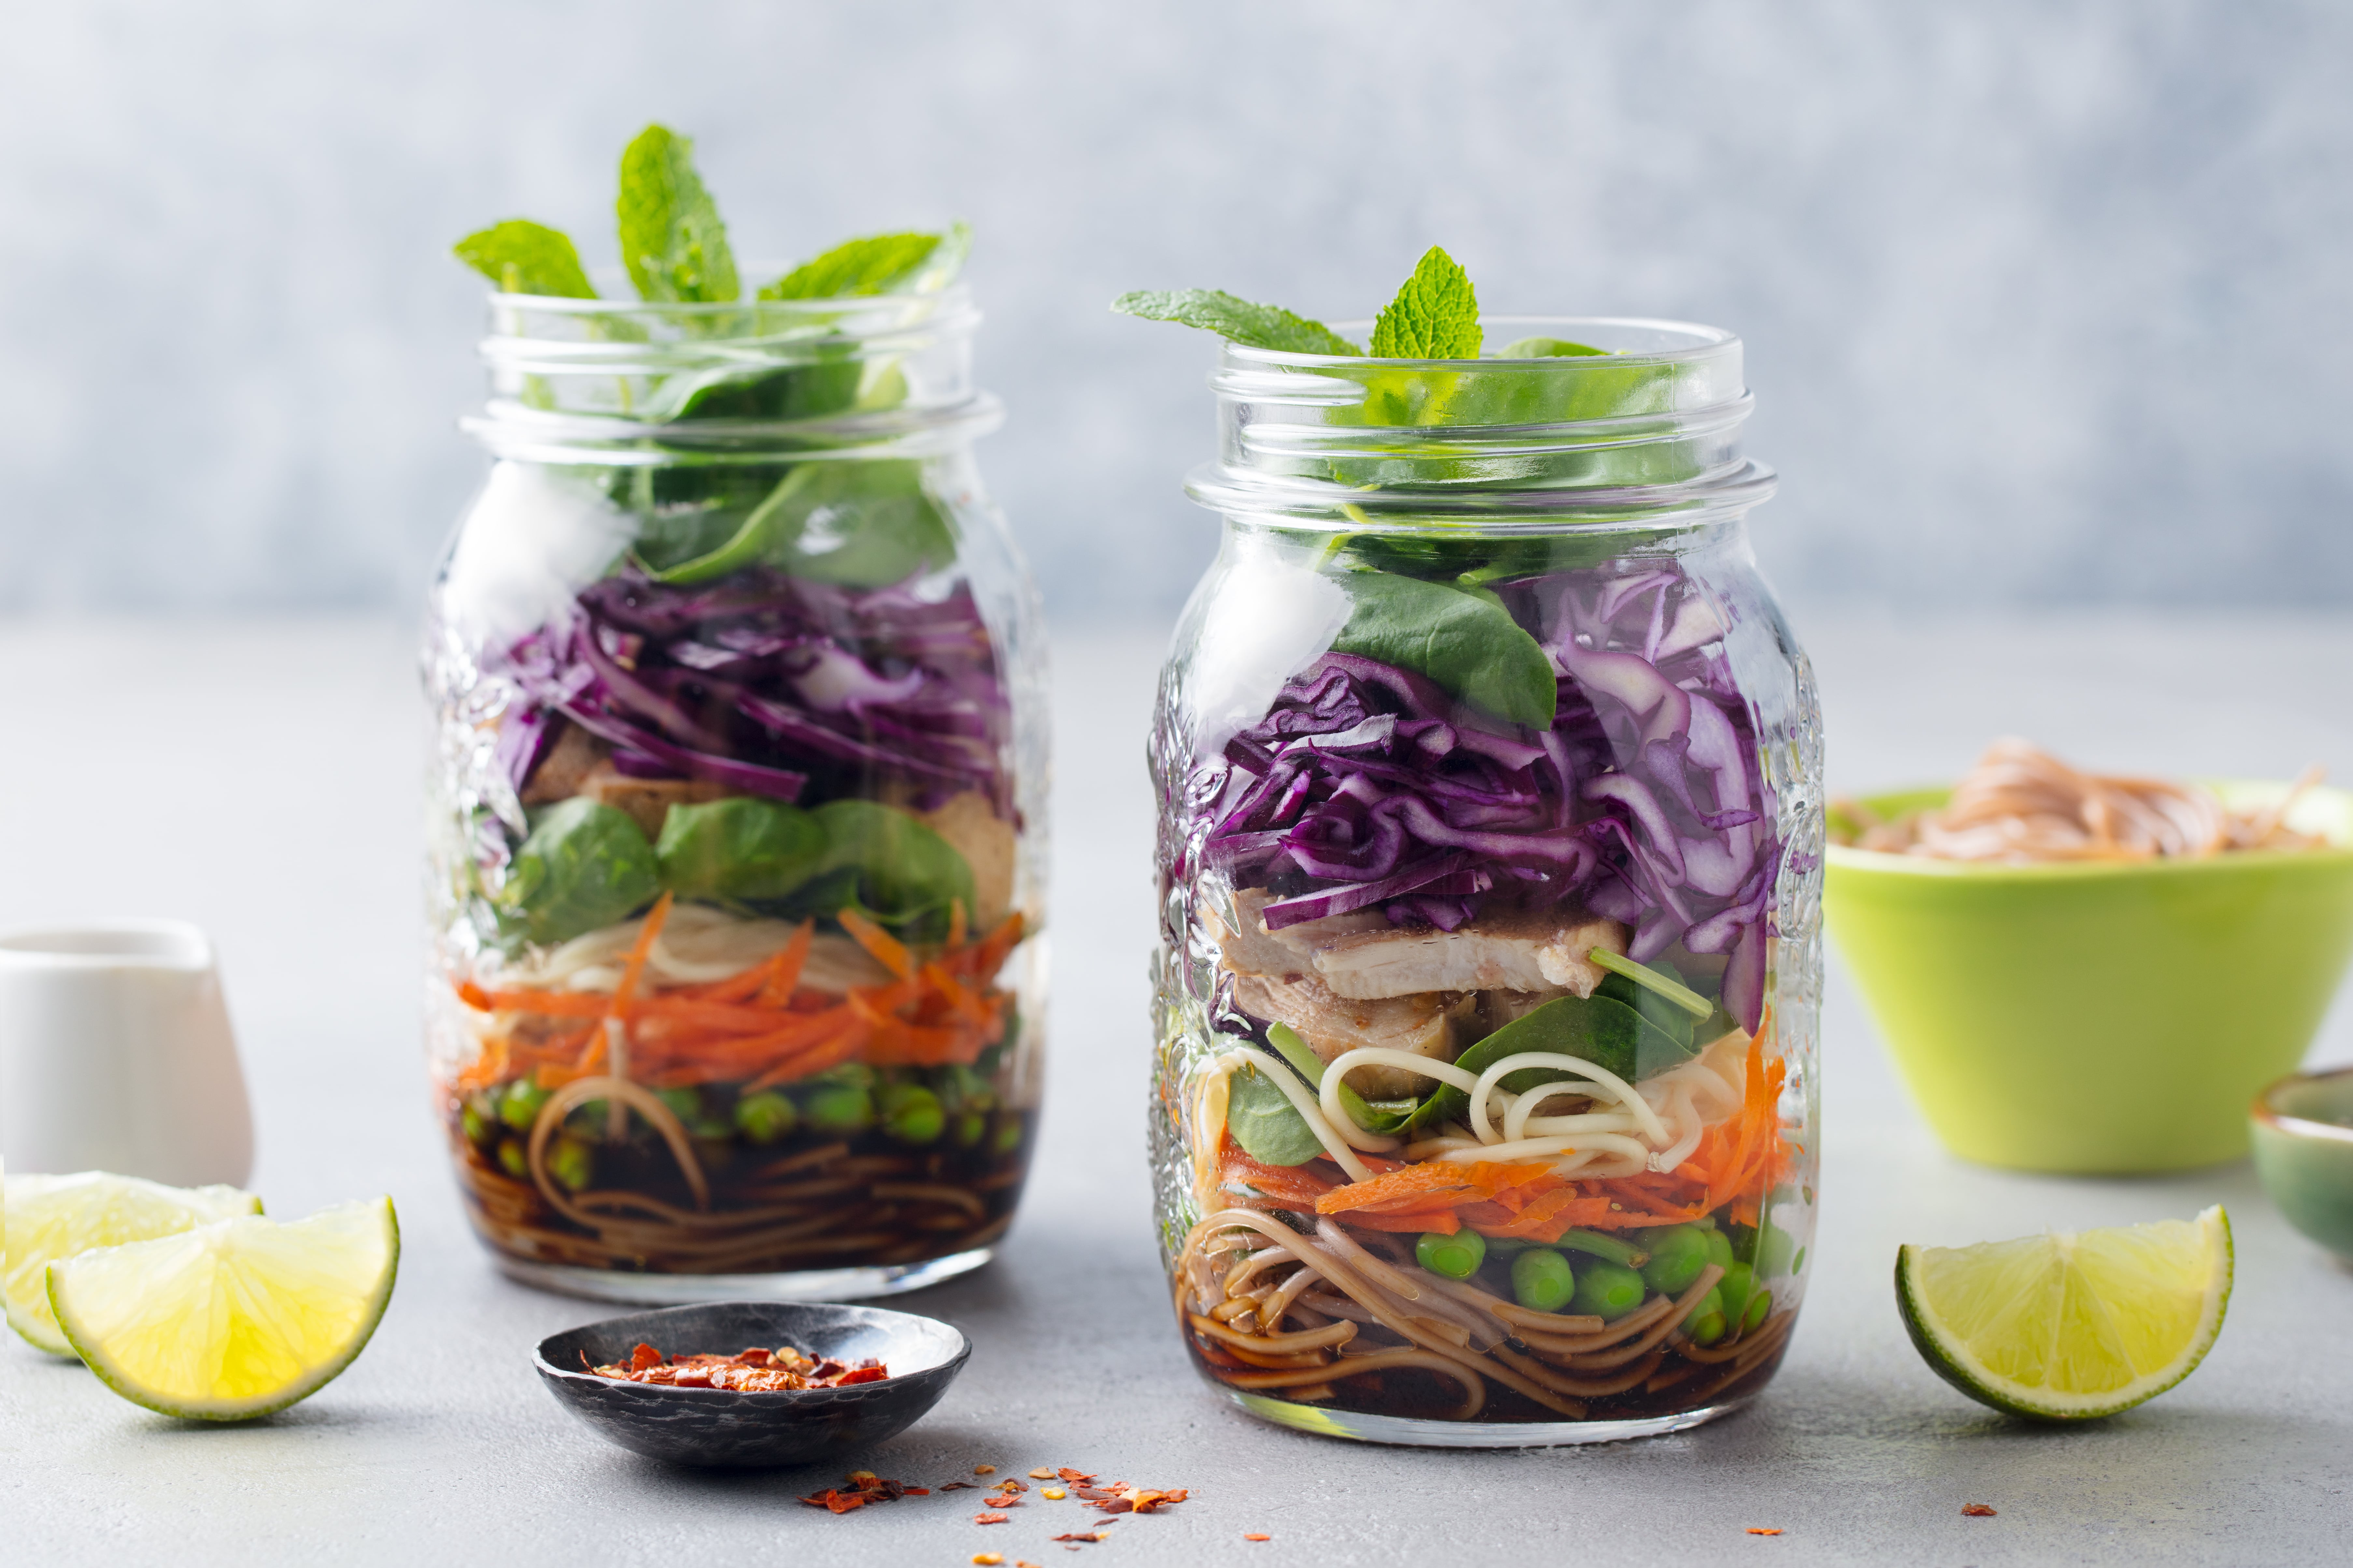 Farberware Basics Salad Dressing Containers, 2-Pack